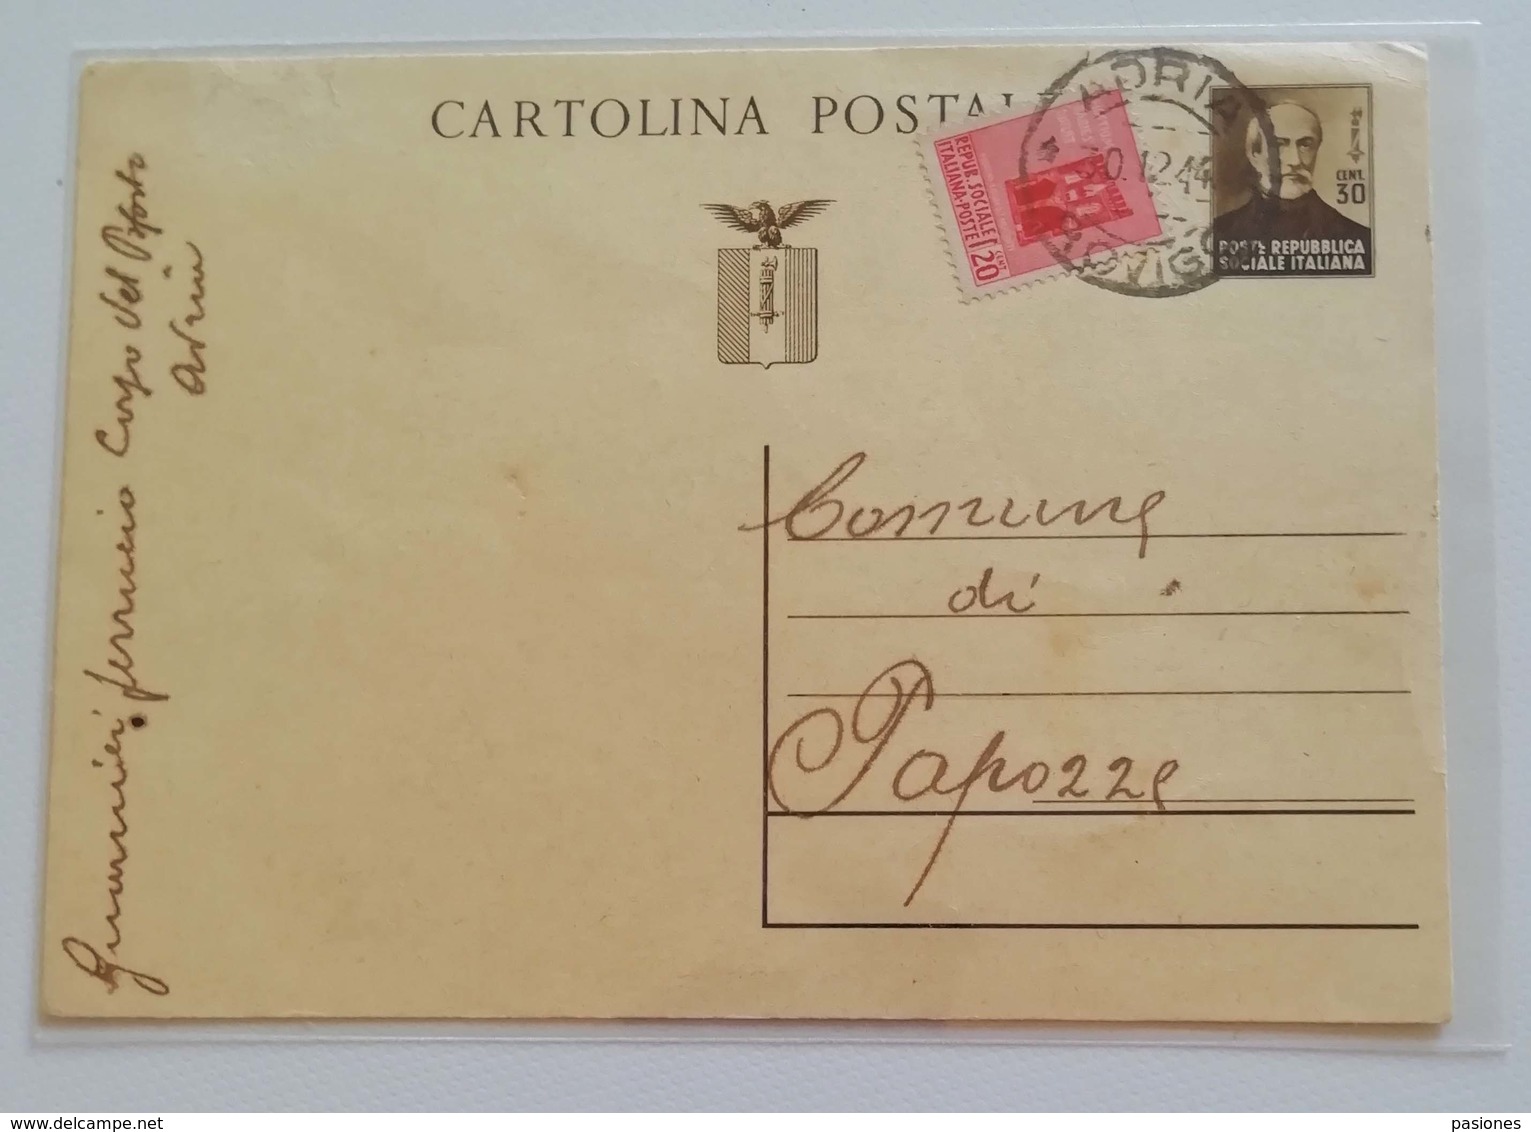 Cartolina Postale Adria-Papozze, 30/12/1944 (uso Nel Distretto) - Stamped Stationery